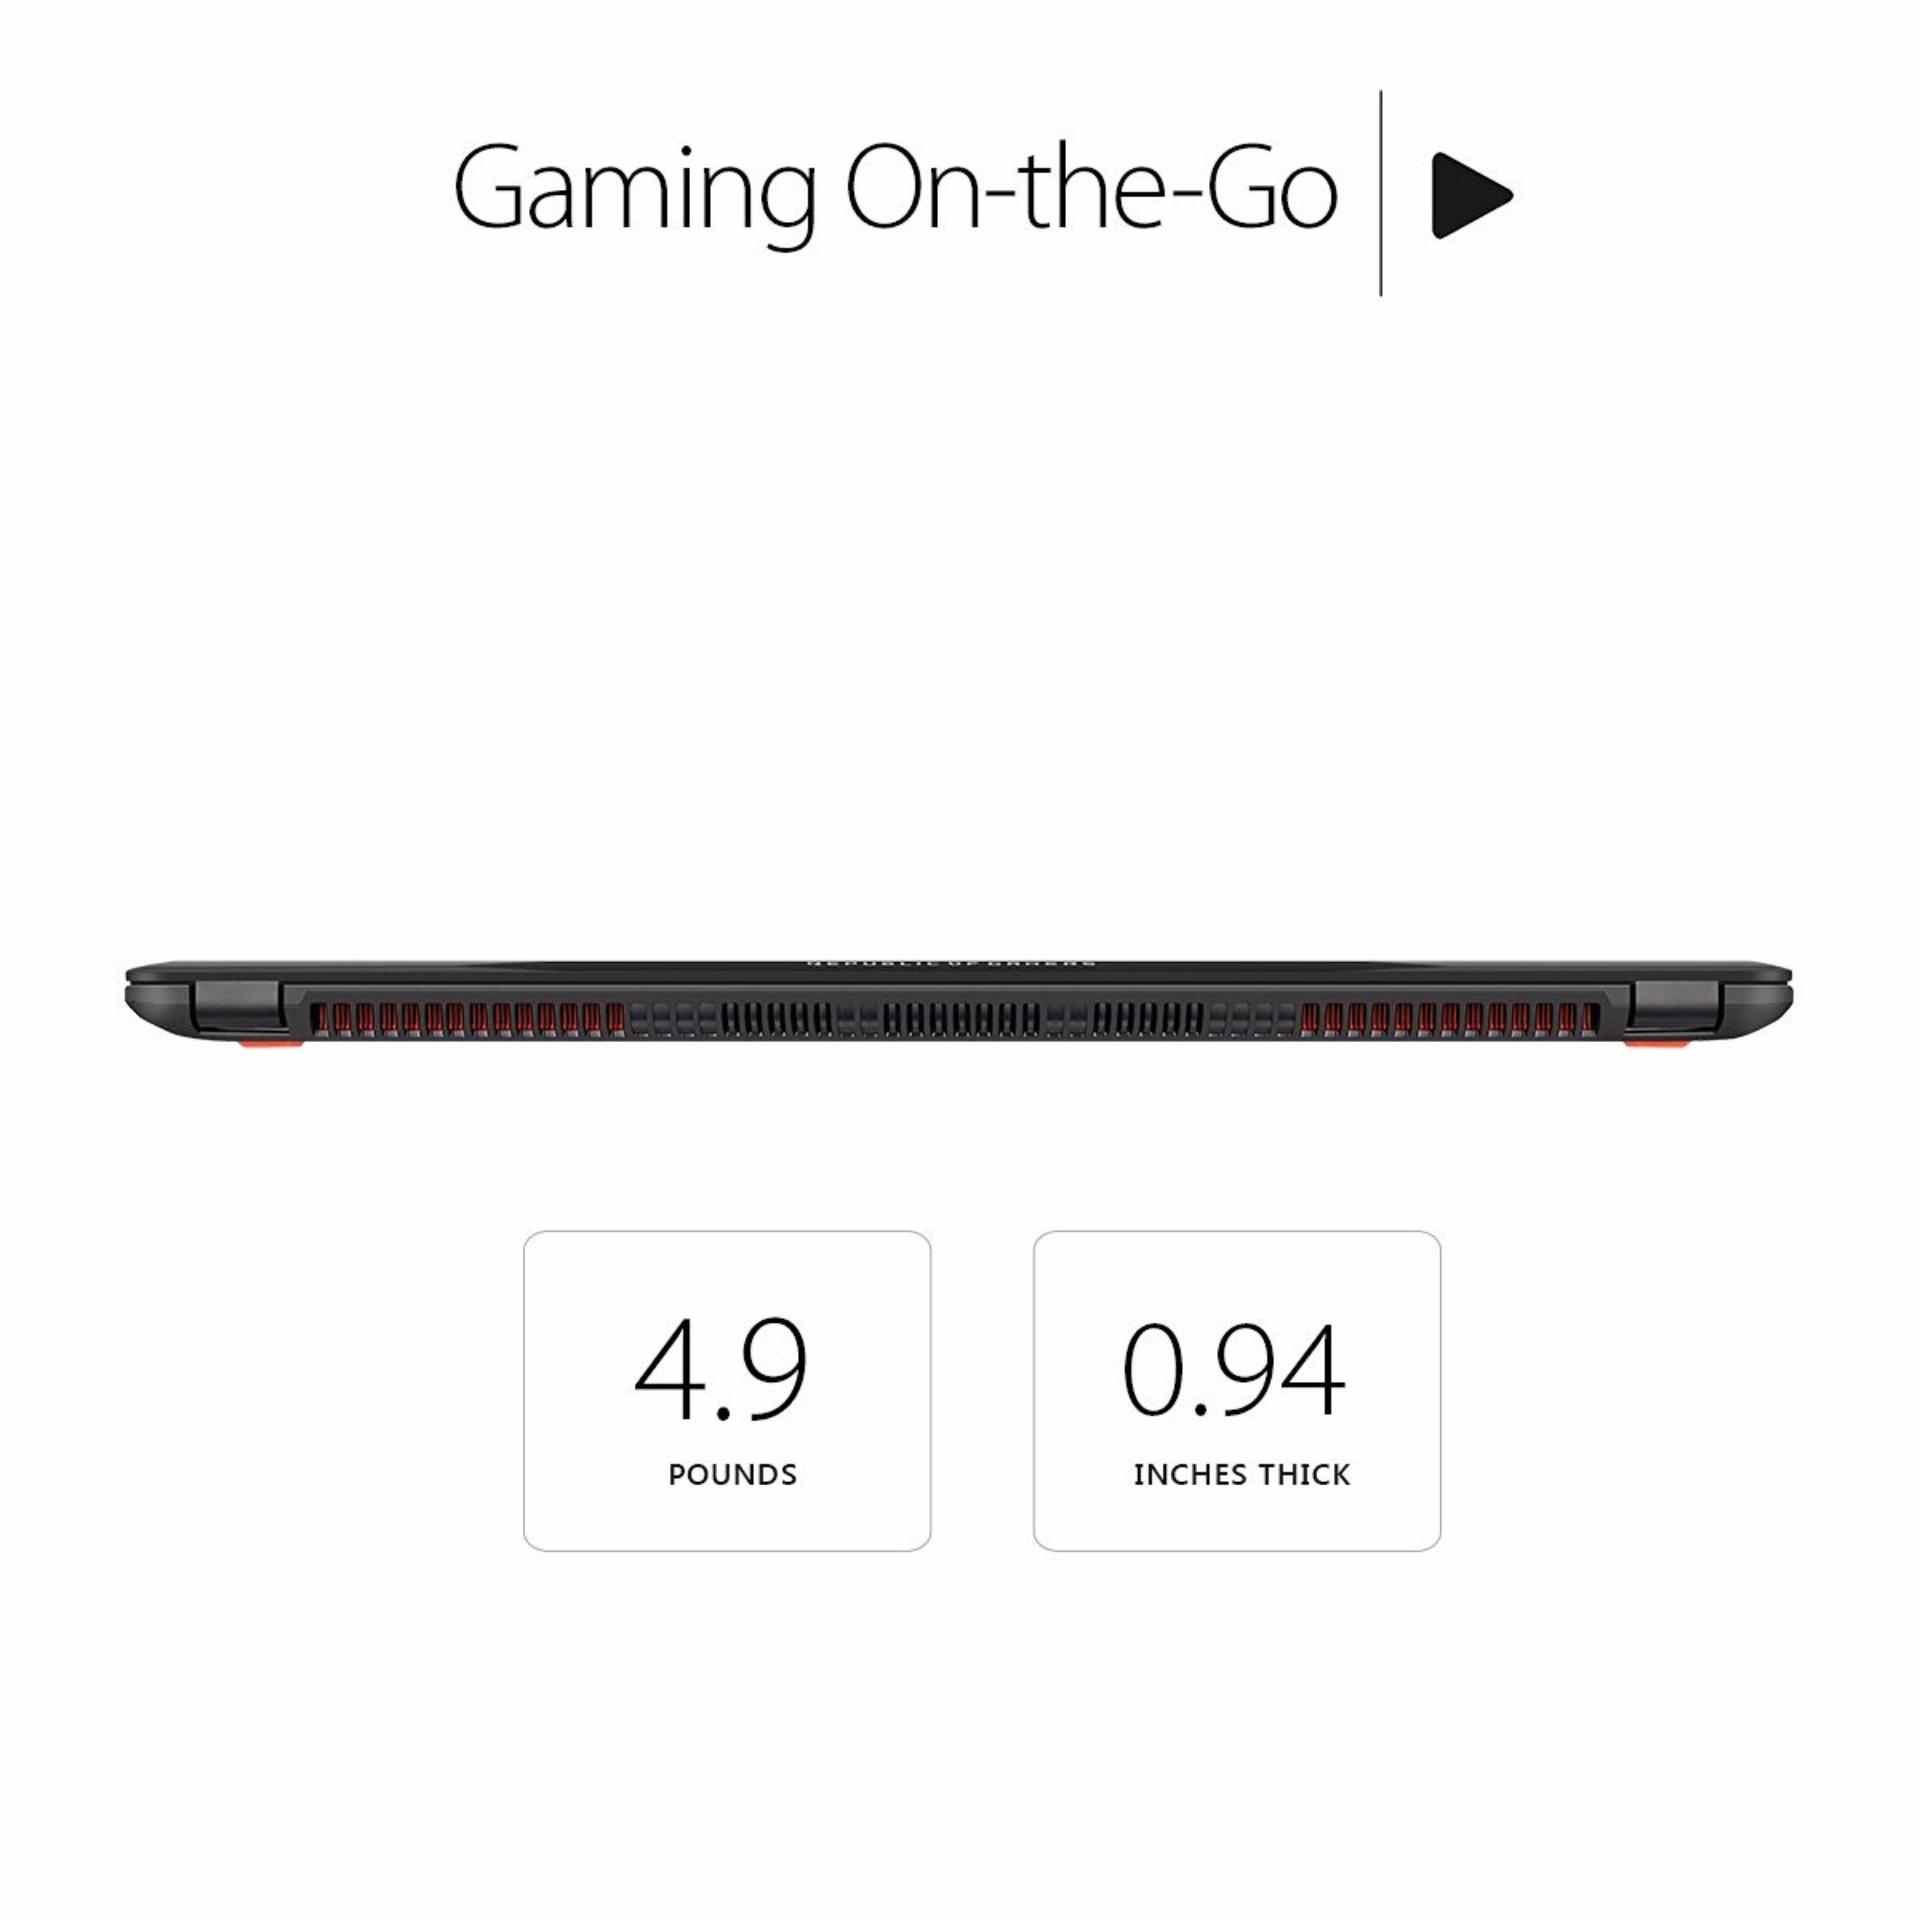 Asus ROG Strix GL502 Gaming Laptop i7-7700HQ (GTX1070) *COMEX PROMO*